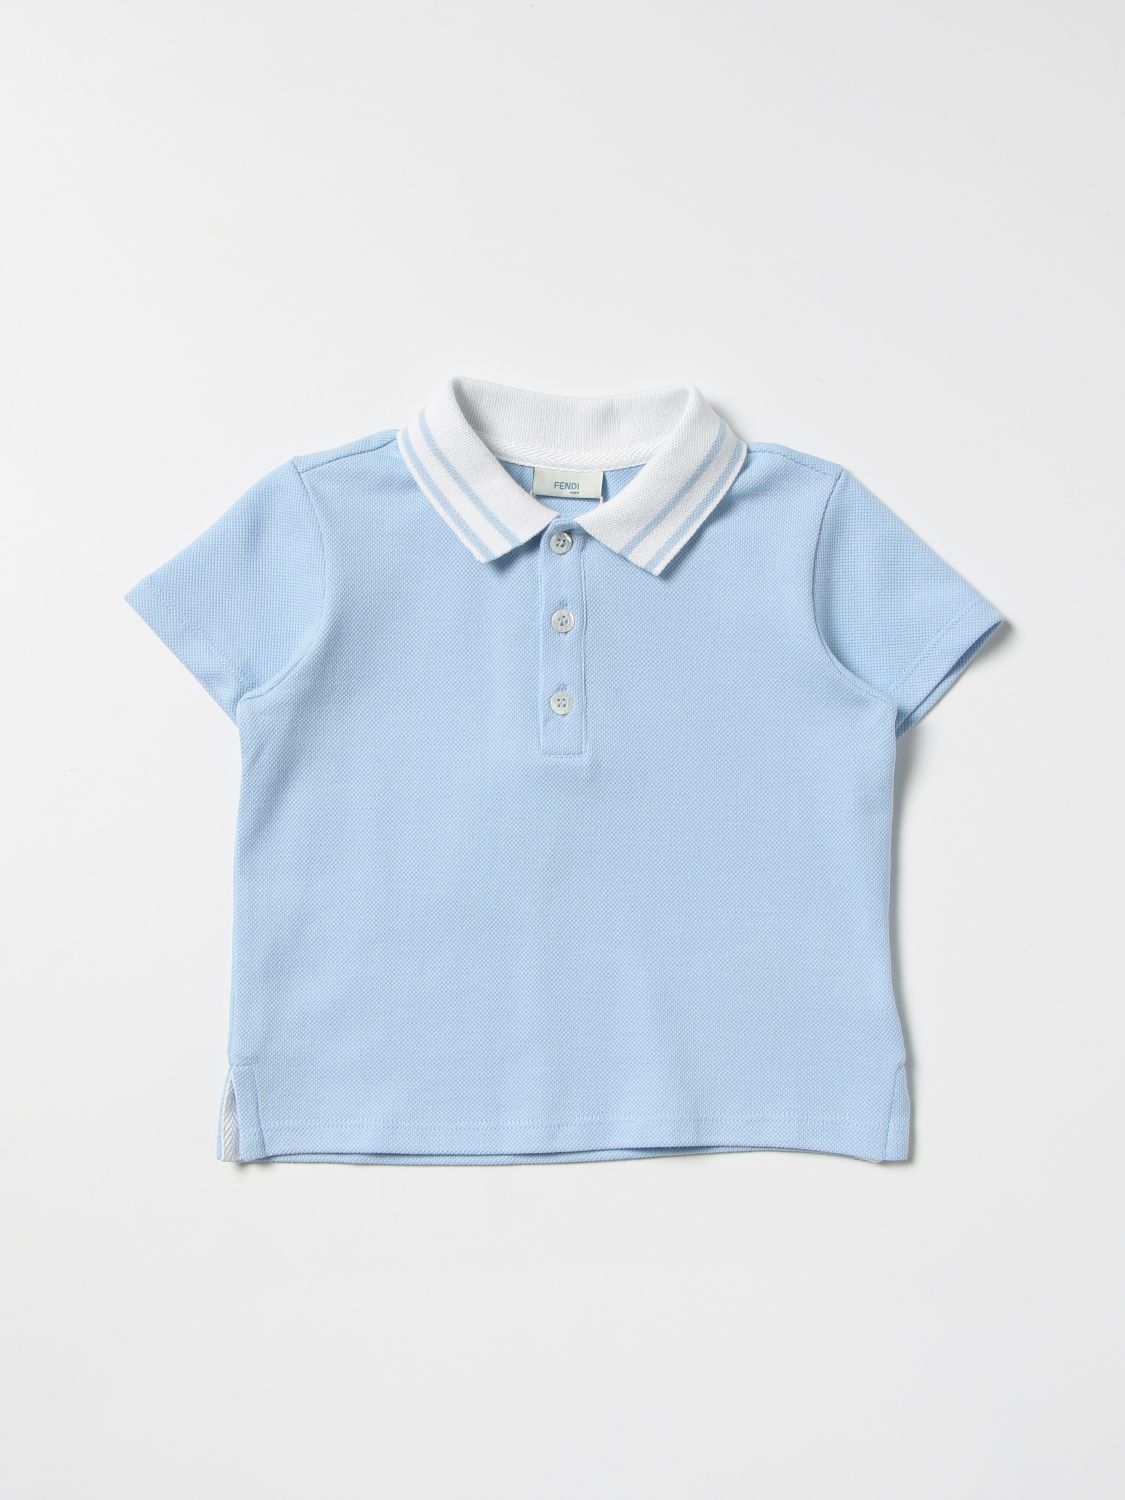 T-shirt Fendi: Fendi t-shirt for baby gnawed blue 1